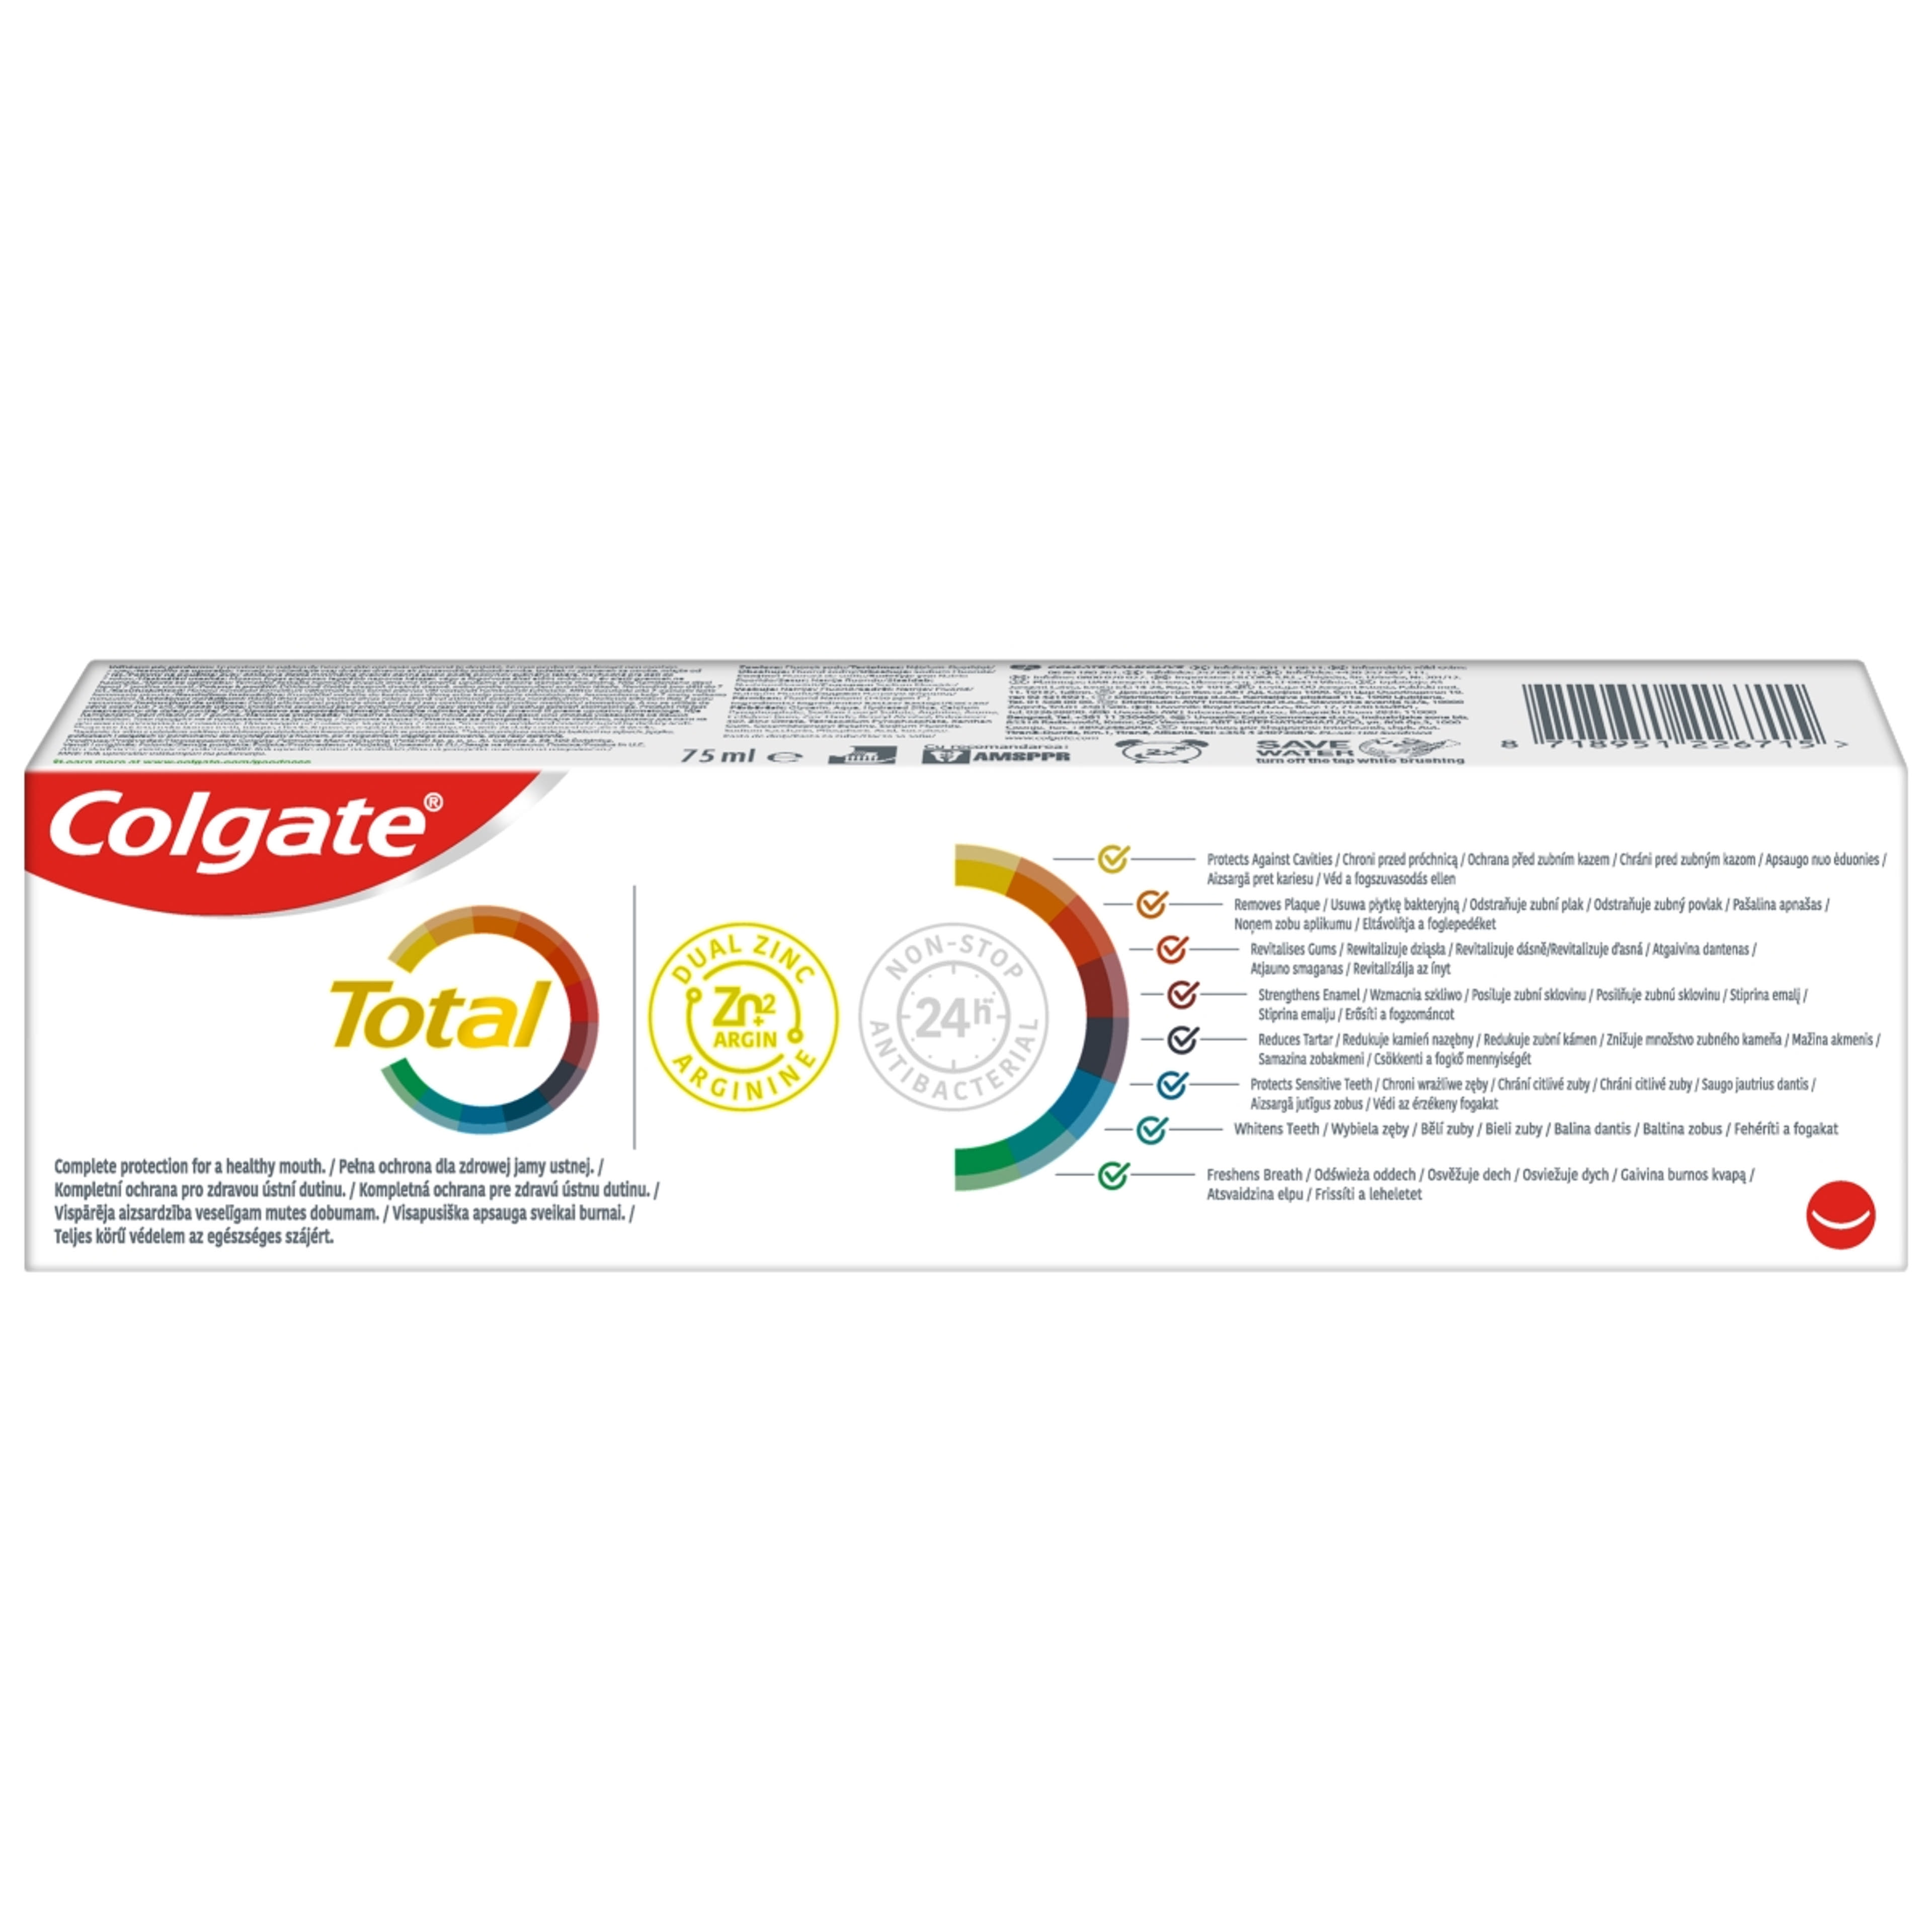 Colgate Total Original fogkrém - 75 ml-3